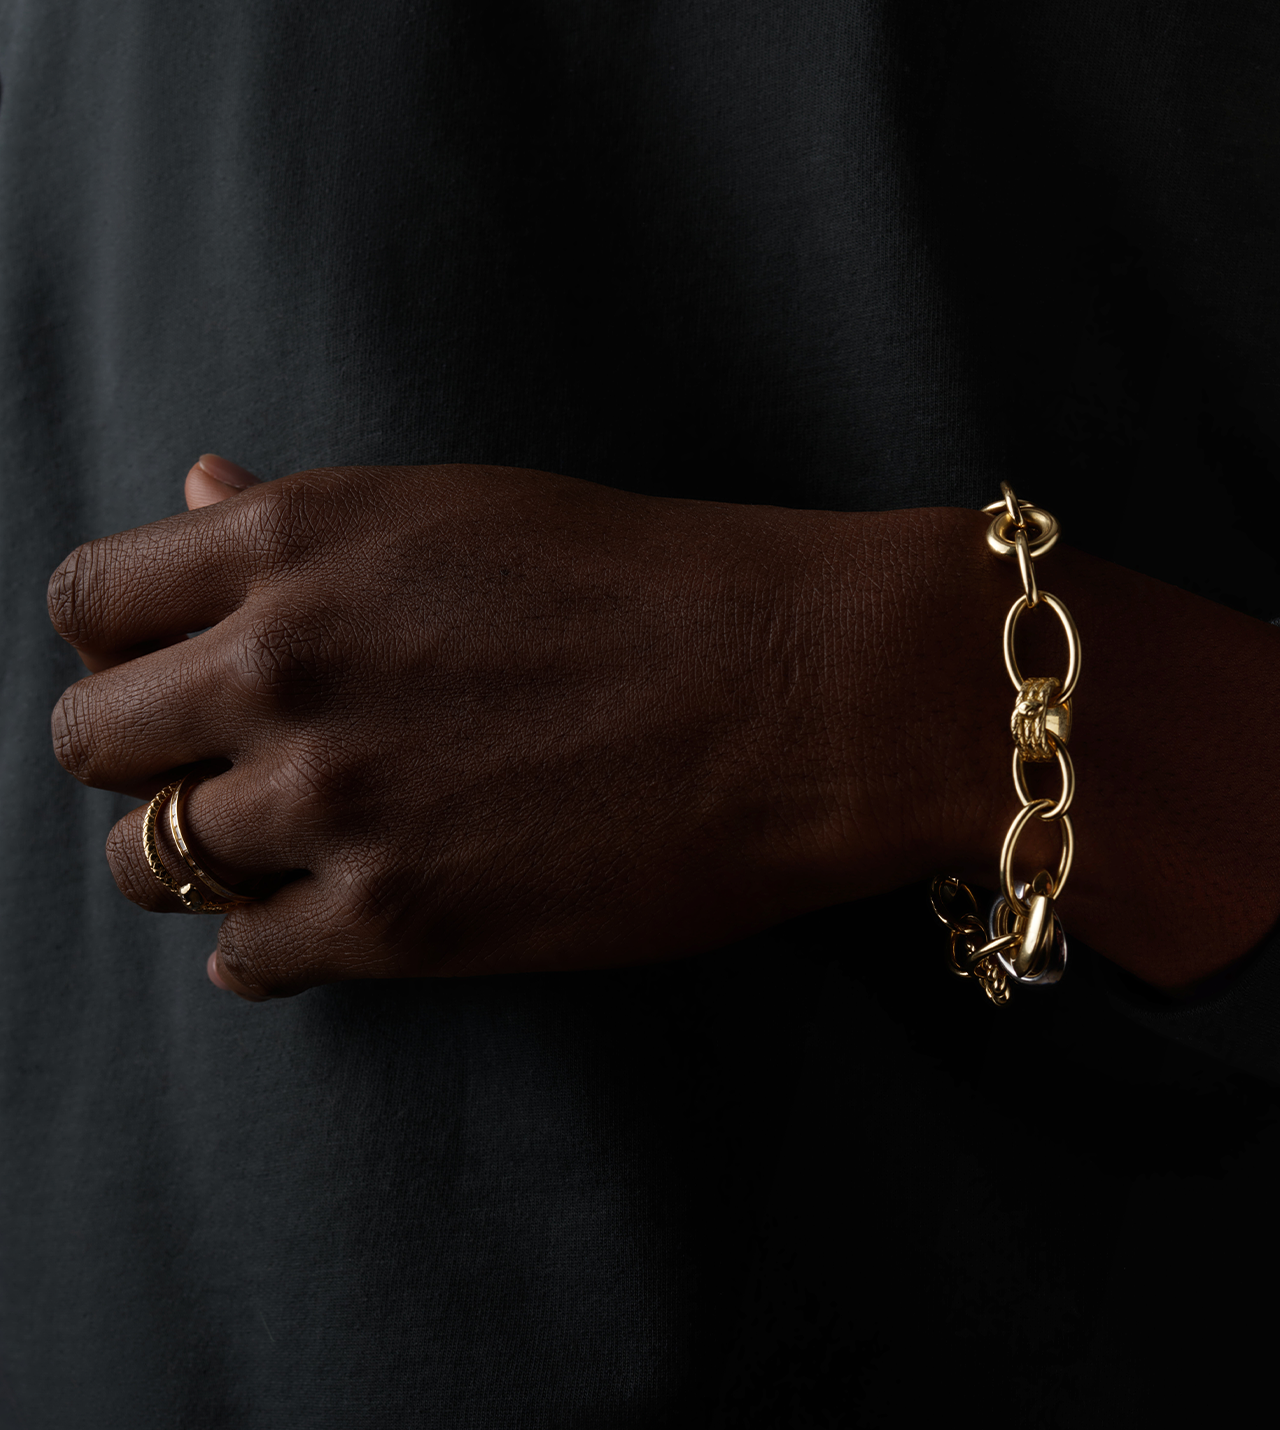 Menagerie Chain Bracelet